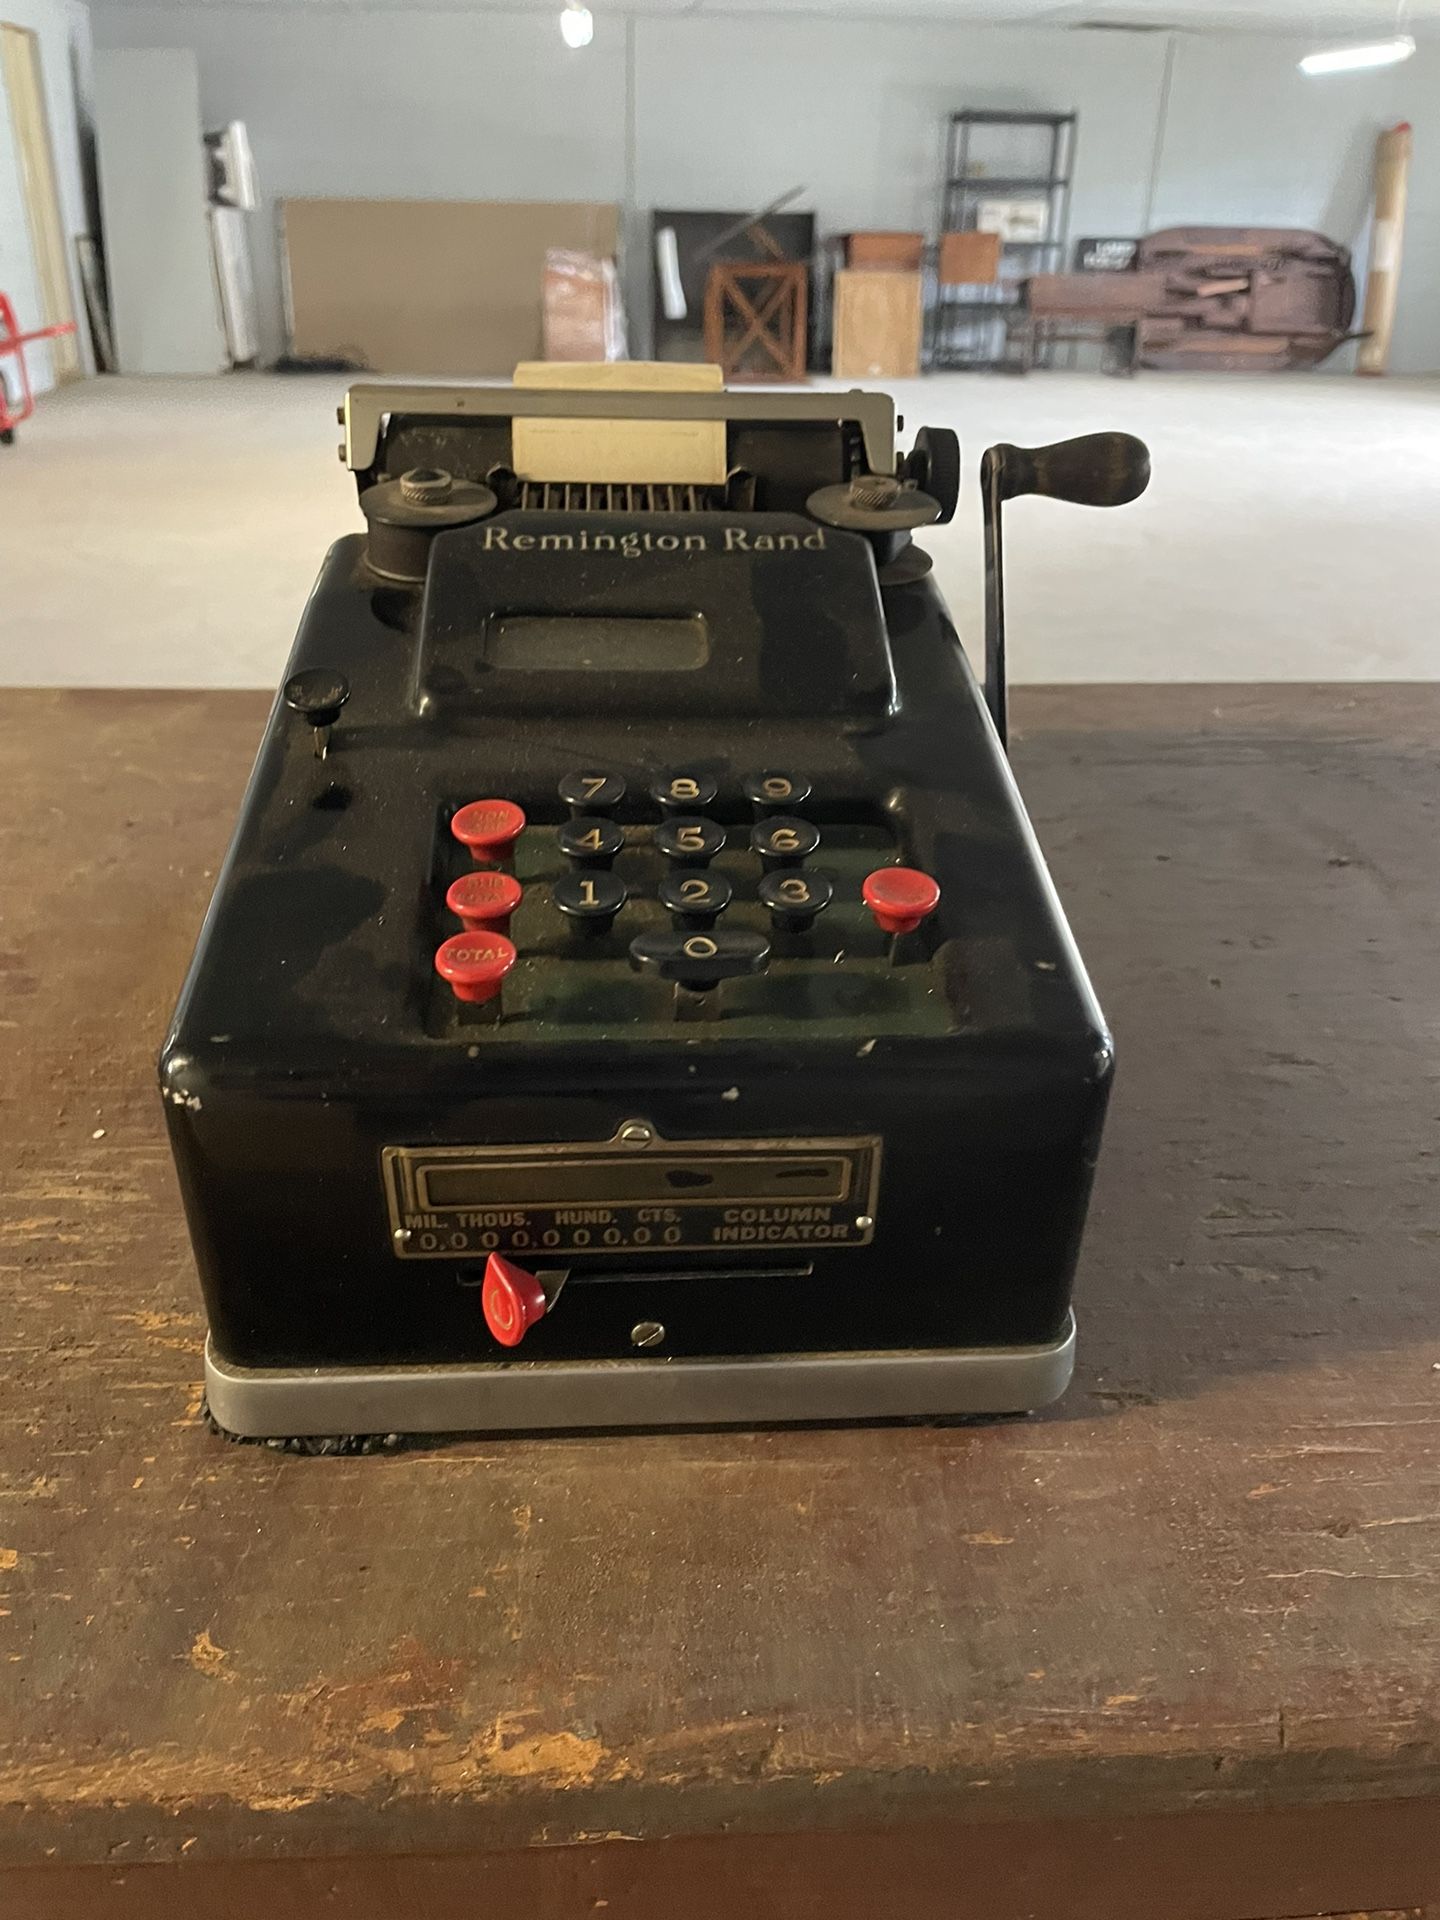 Remington Rand Adding Machine